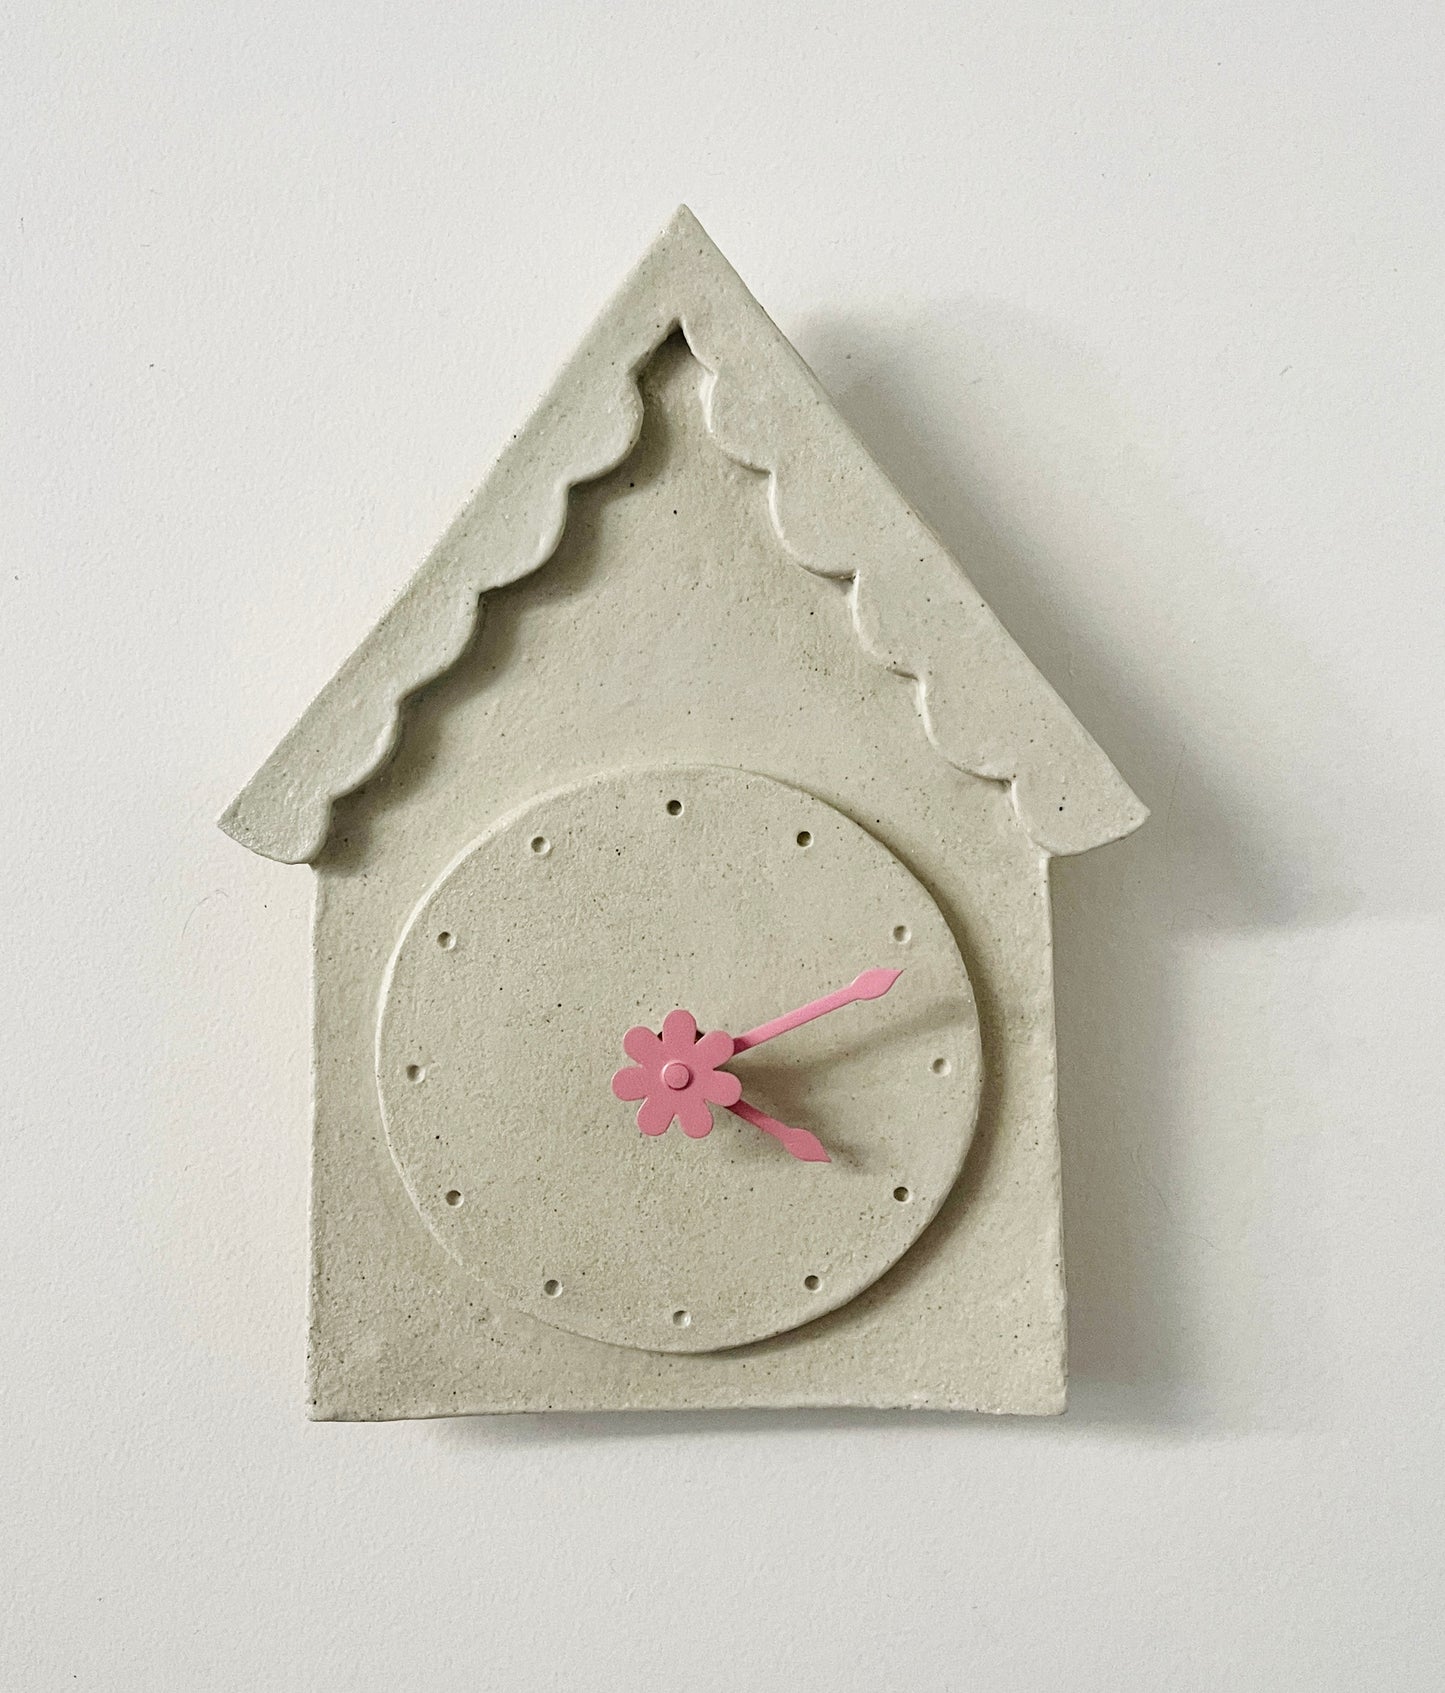 House shaped ceramic heirloom clock